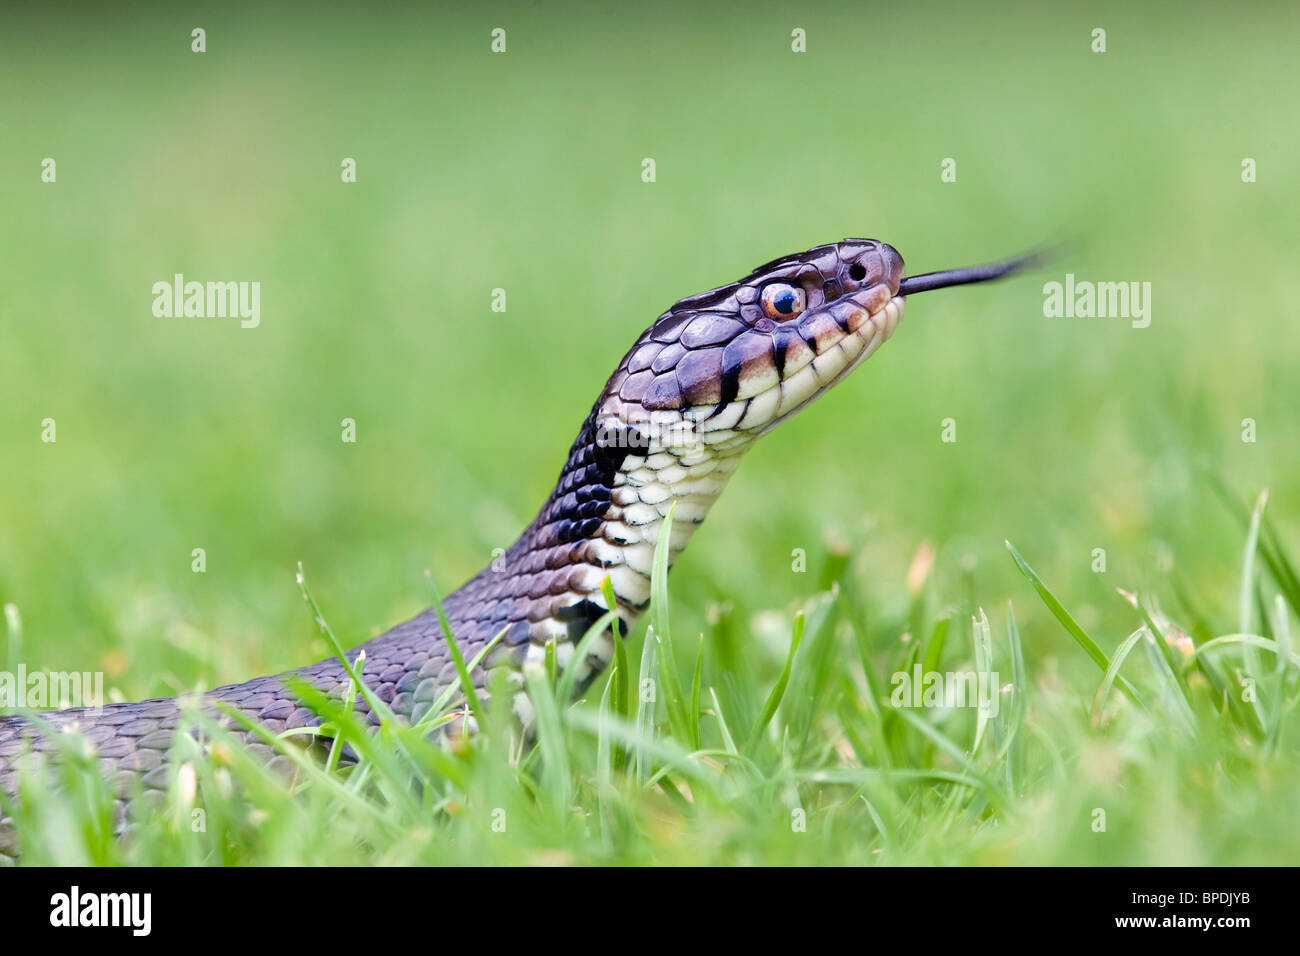 Grass Snake; Natrix natrix; flicking tongue in the grass Stock Photo